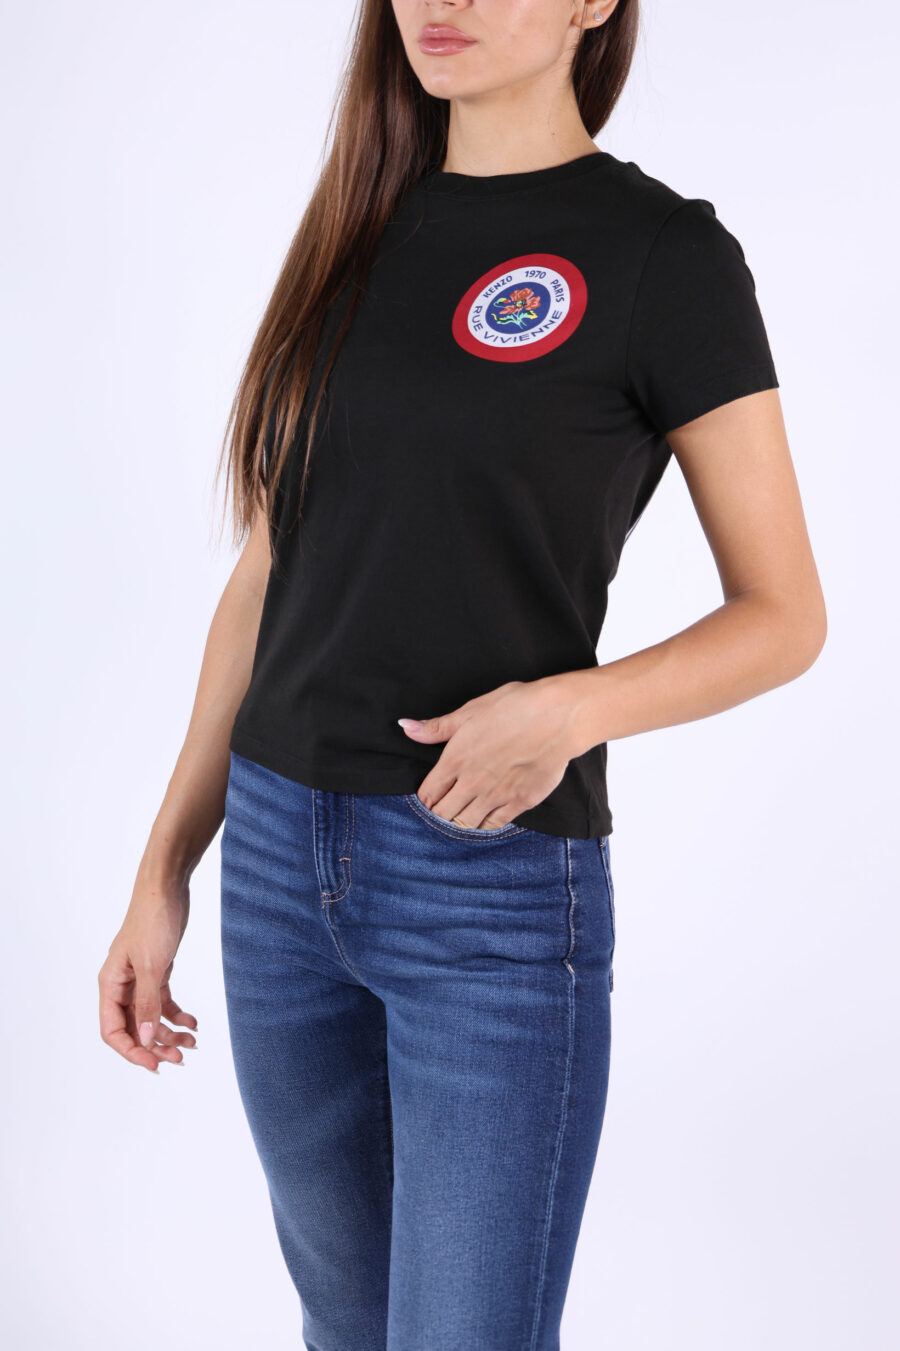 Camiseta negra con minilogo redondo y gráfica detrás - 361223054662201779